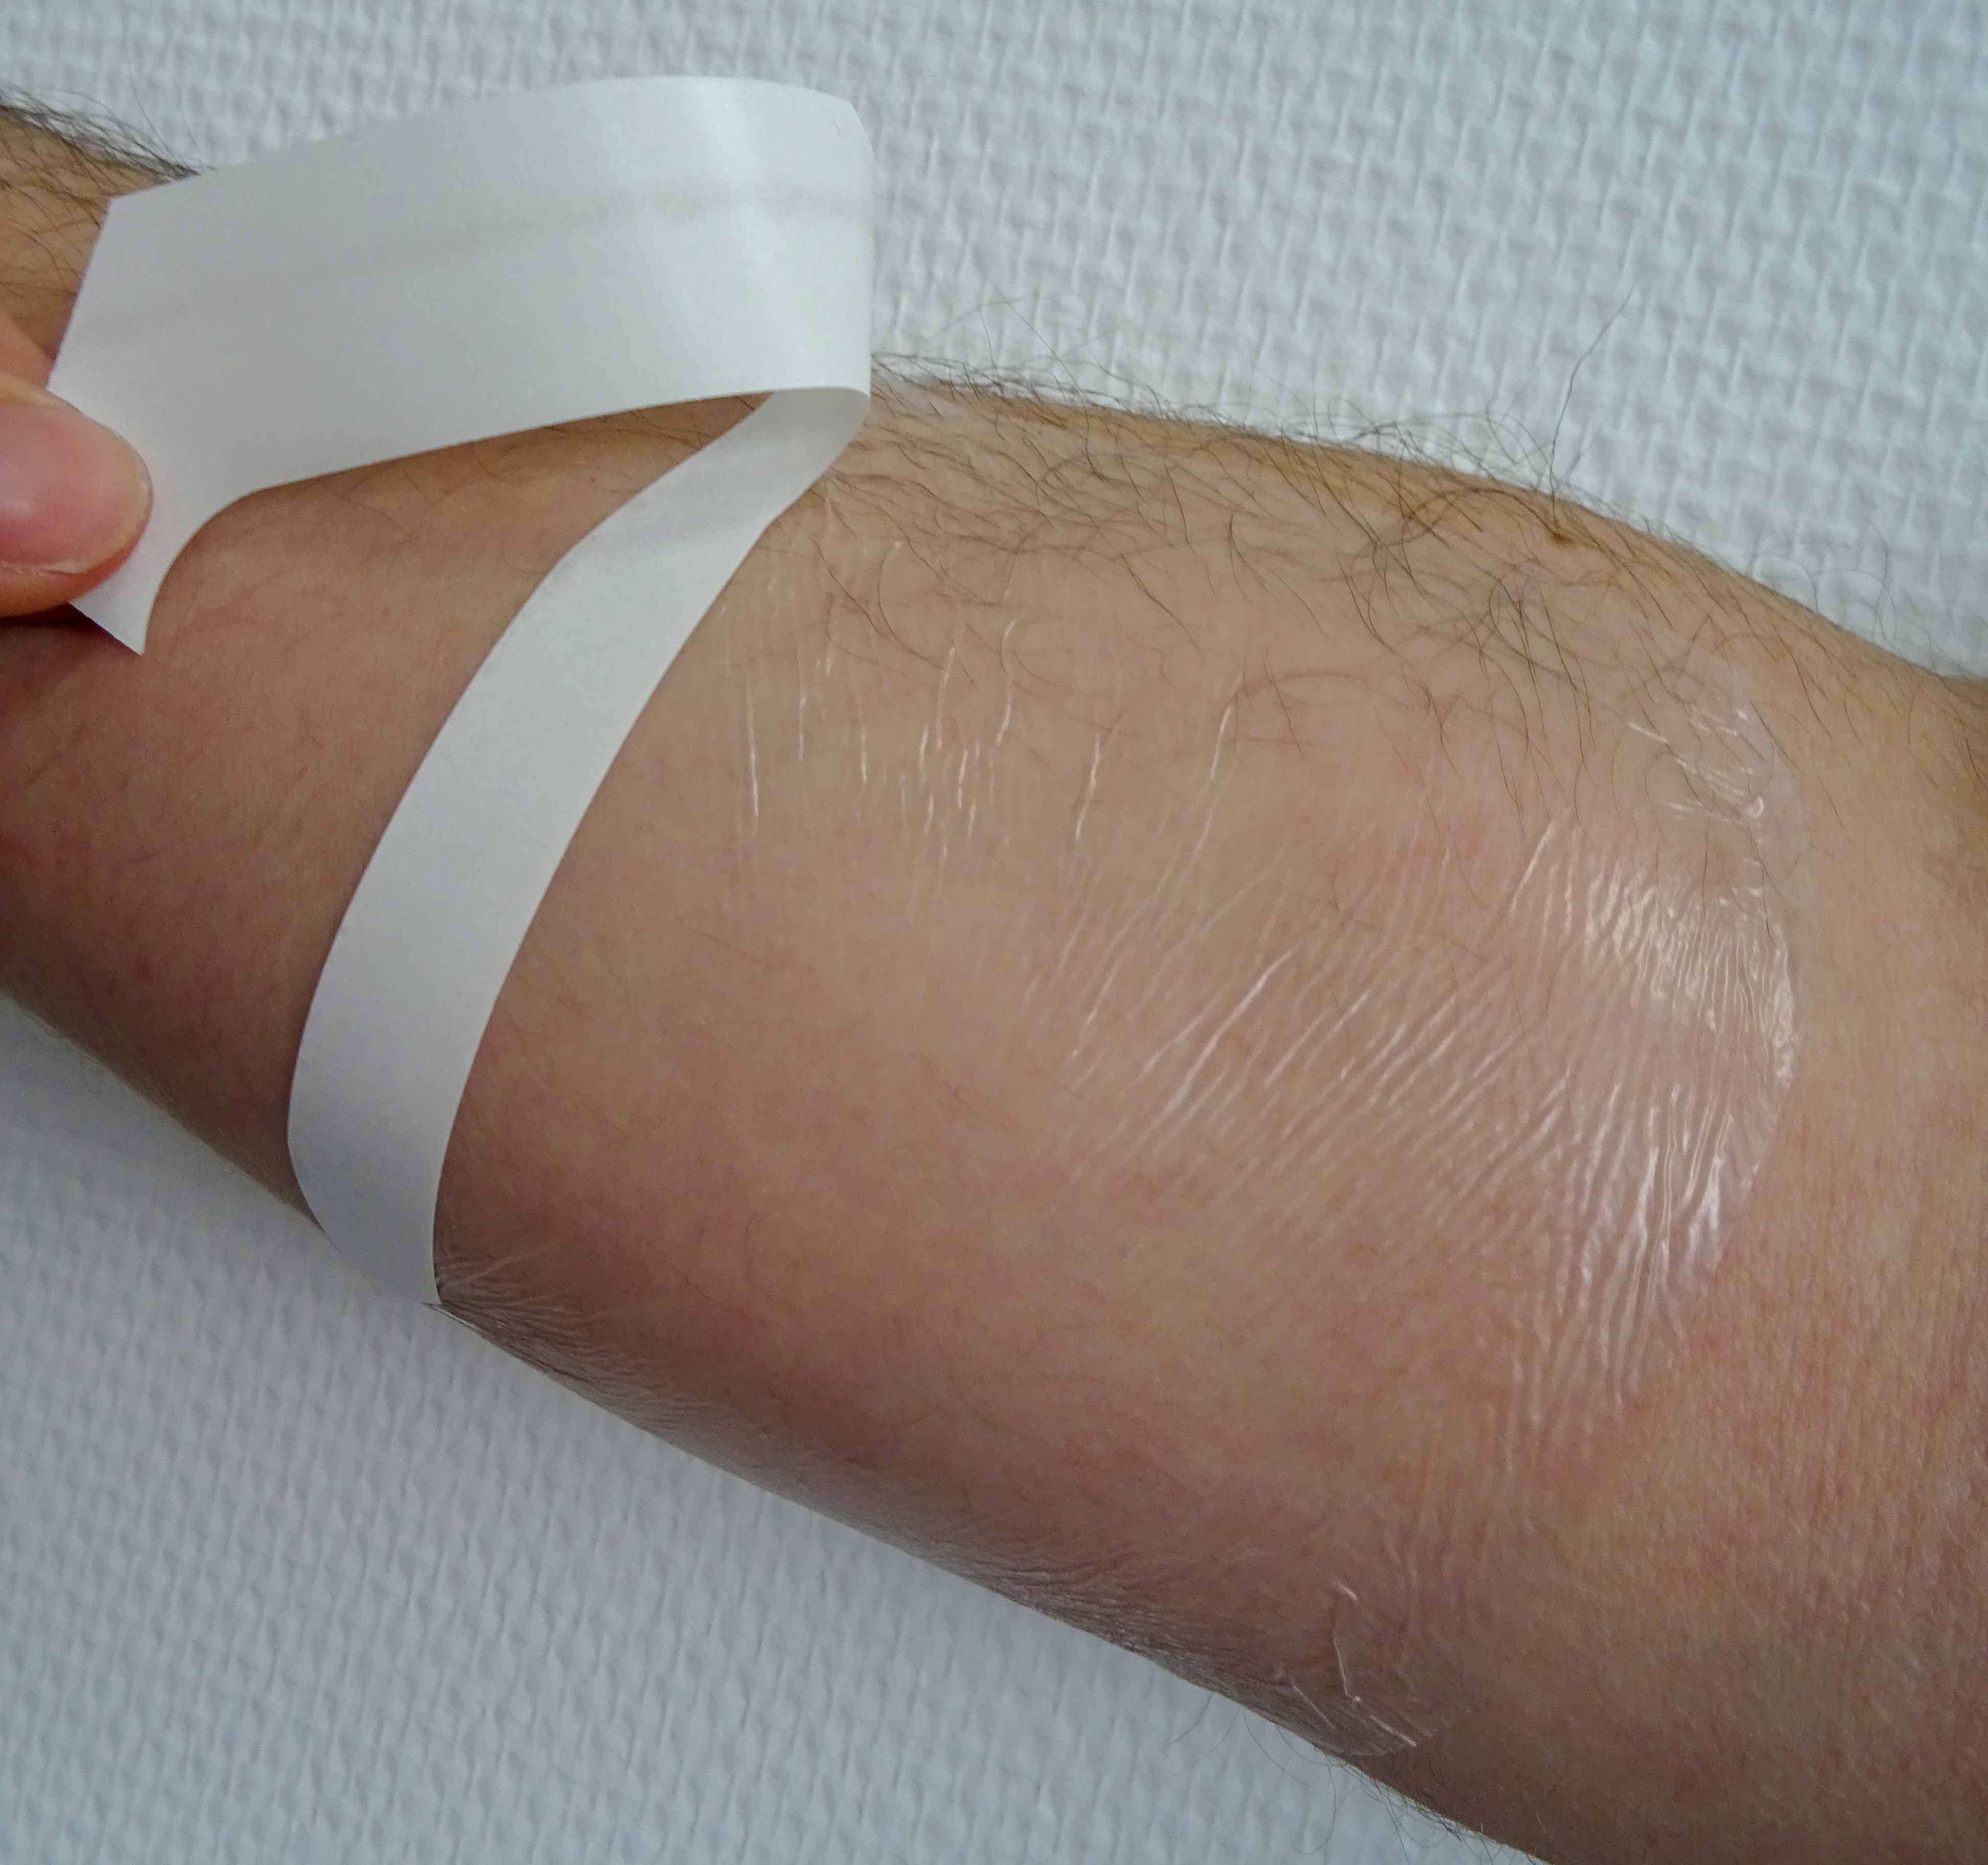 <ul><li>硅凝胶单面聚氨酯膜</li><li>设计用于保护插入点以及周边和敏感皮肤 </li><li>可以用硅胶去除，移除时没有疼痛或创伤</li></ul>